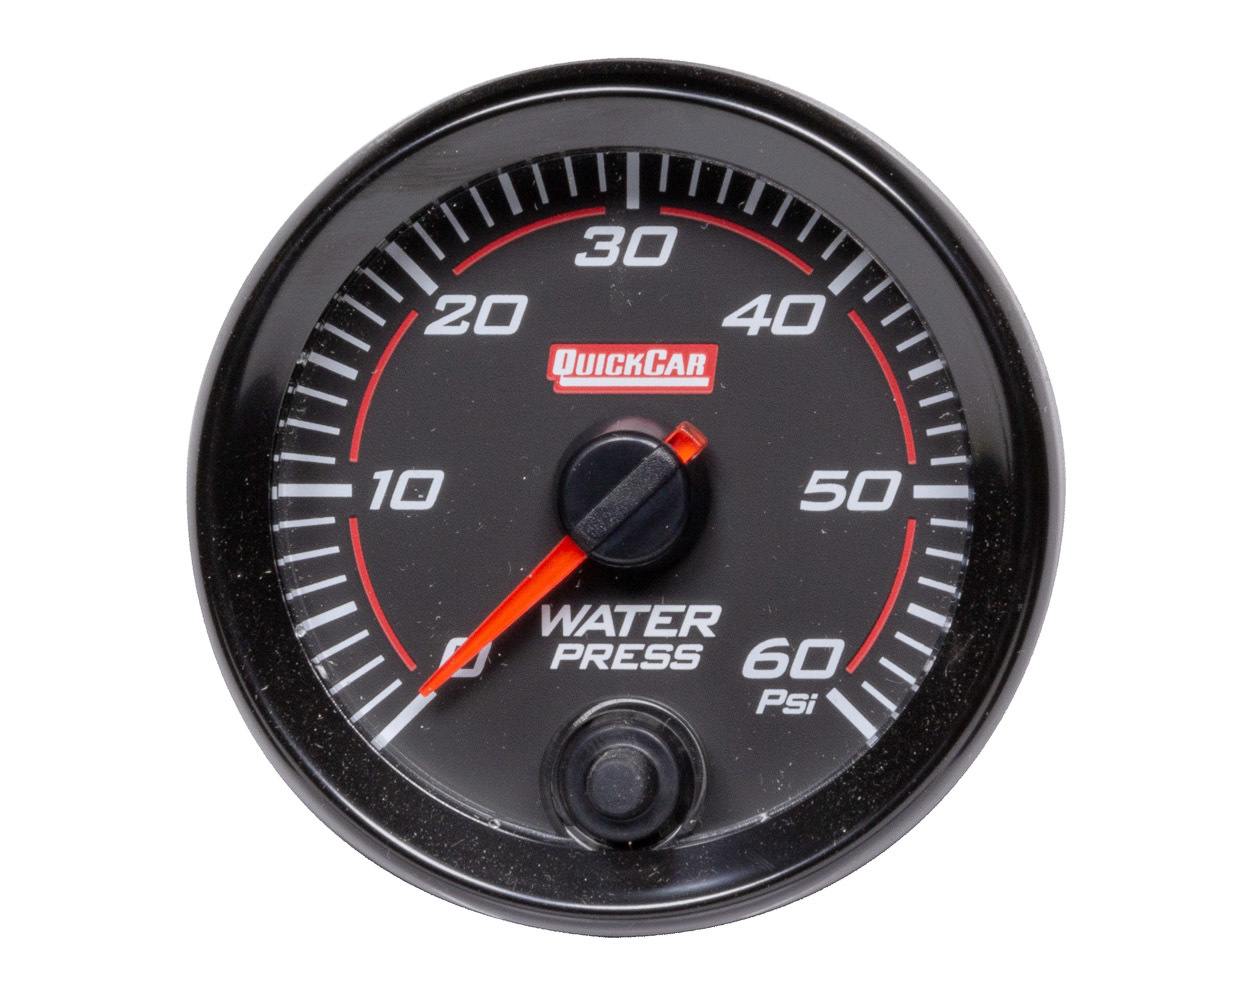 QuickCar 69-008 Water Pressure Gauge, Redline, 0-60 psi, Electric, Analog, 2-5/8 in Diameter, Black Face, Kit